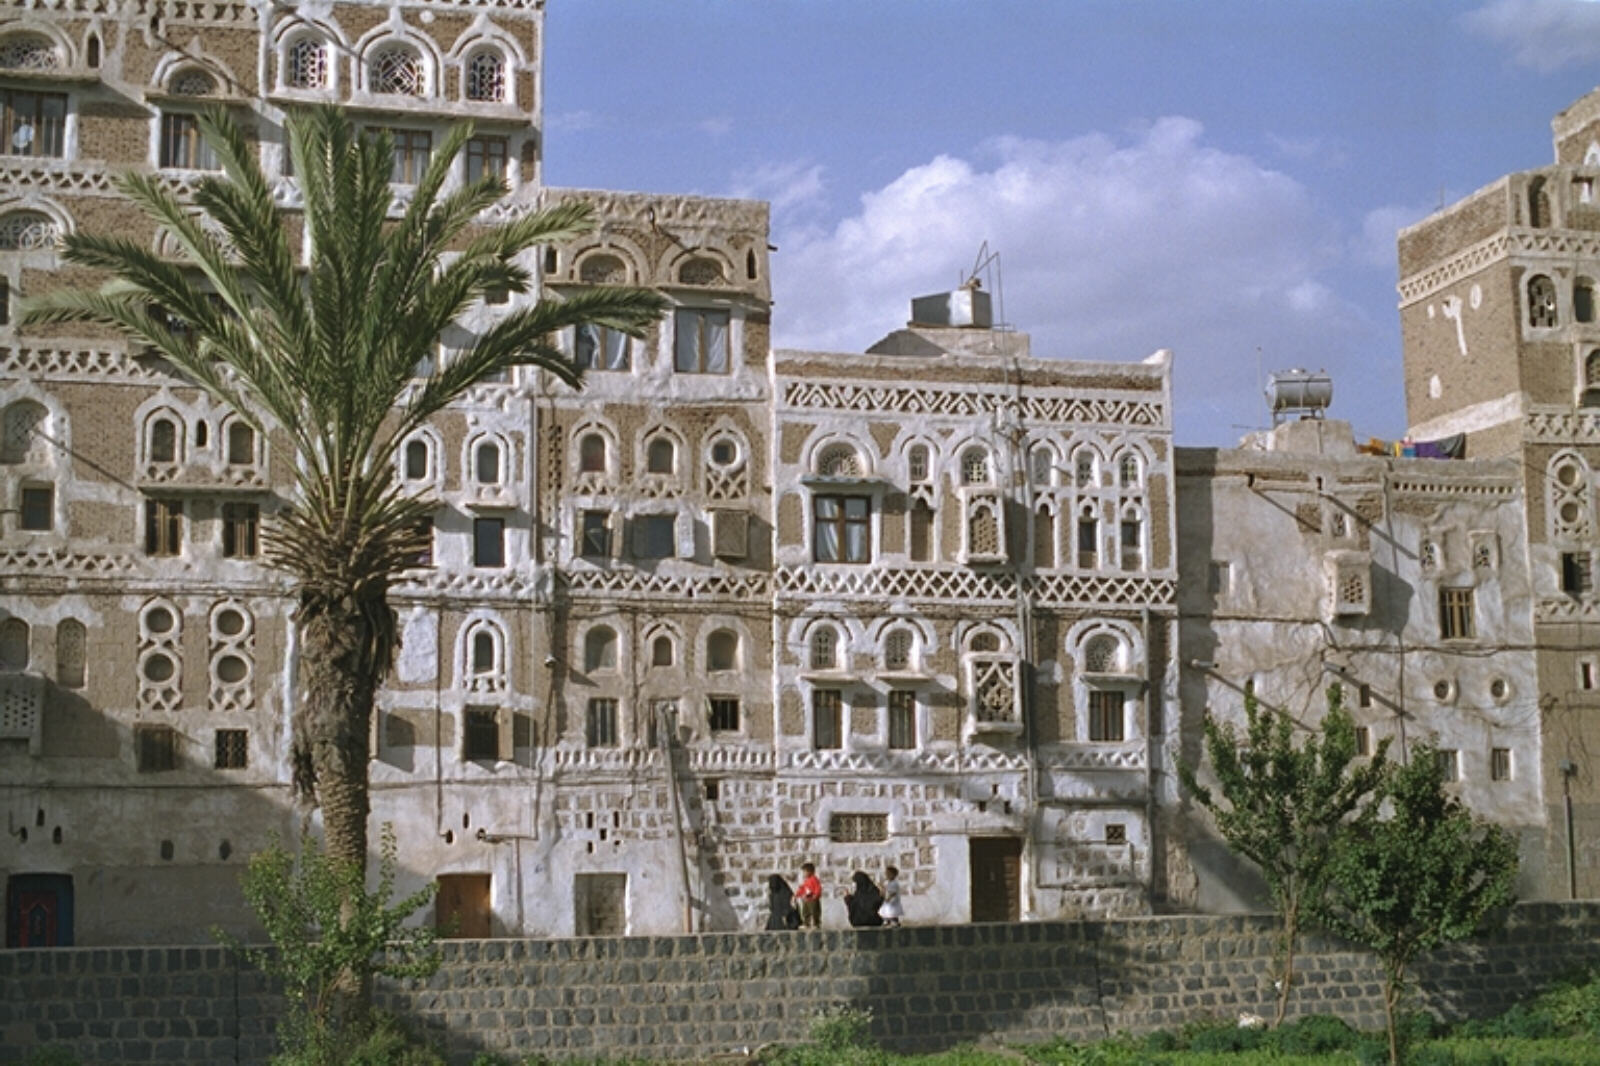 Qasmi Street in the old city of Sanaa, Yemen